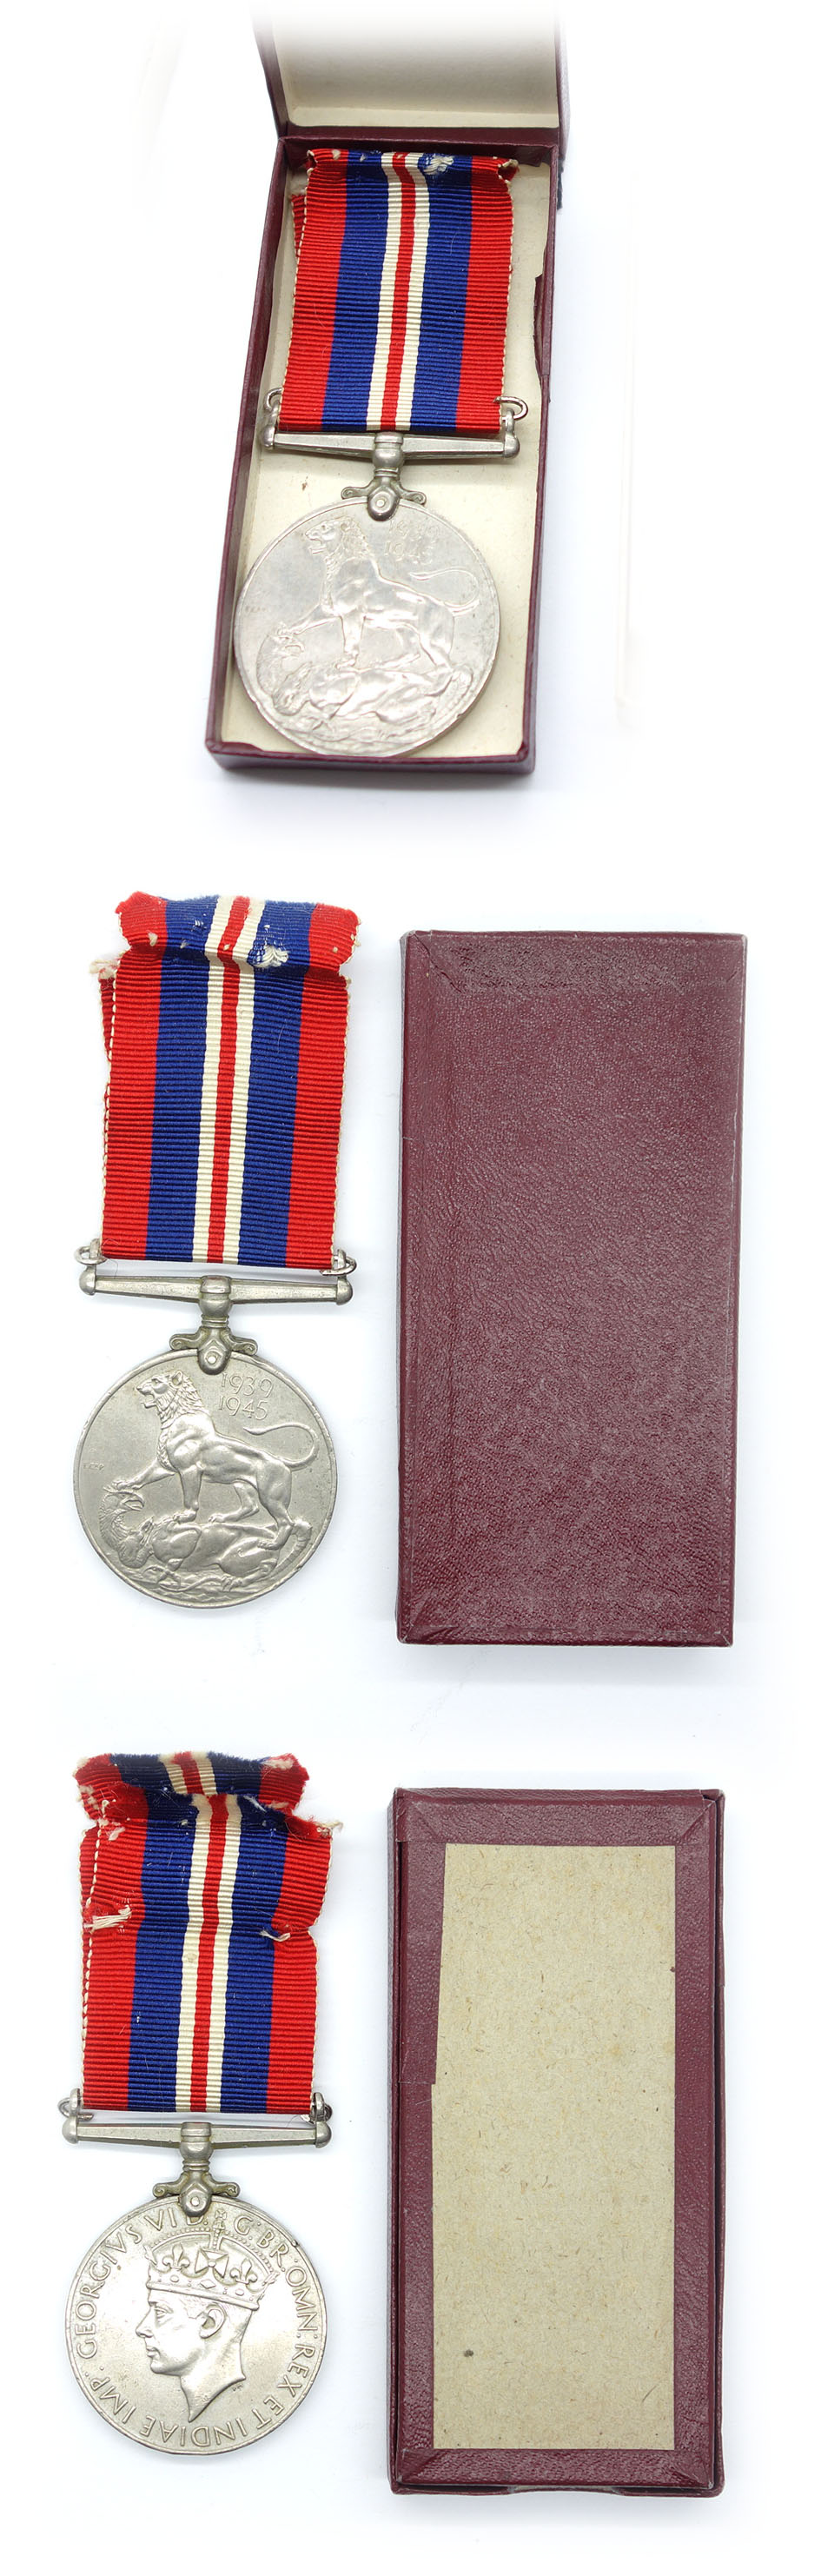 1939-1945 War Medal in issue case